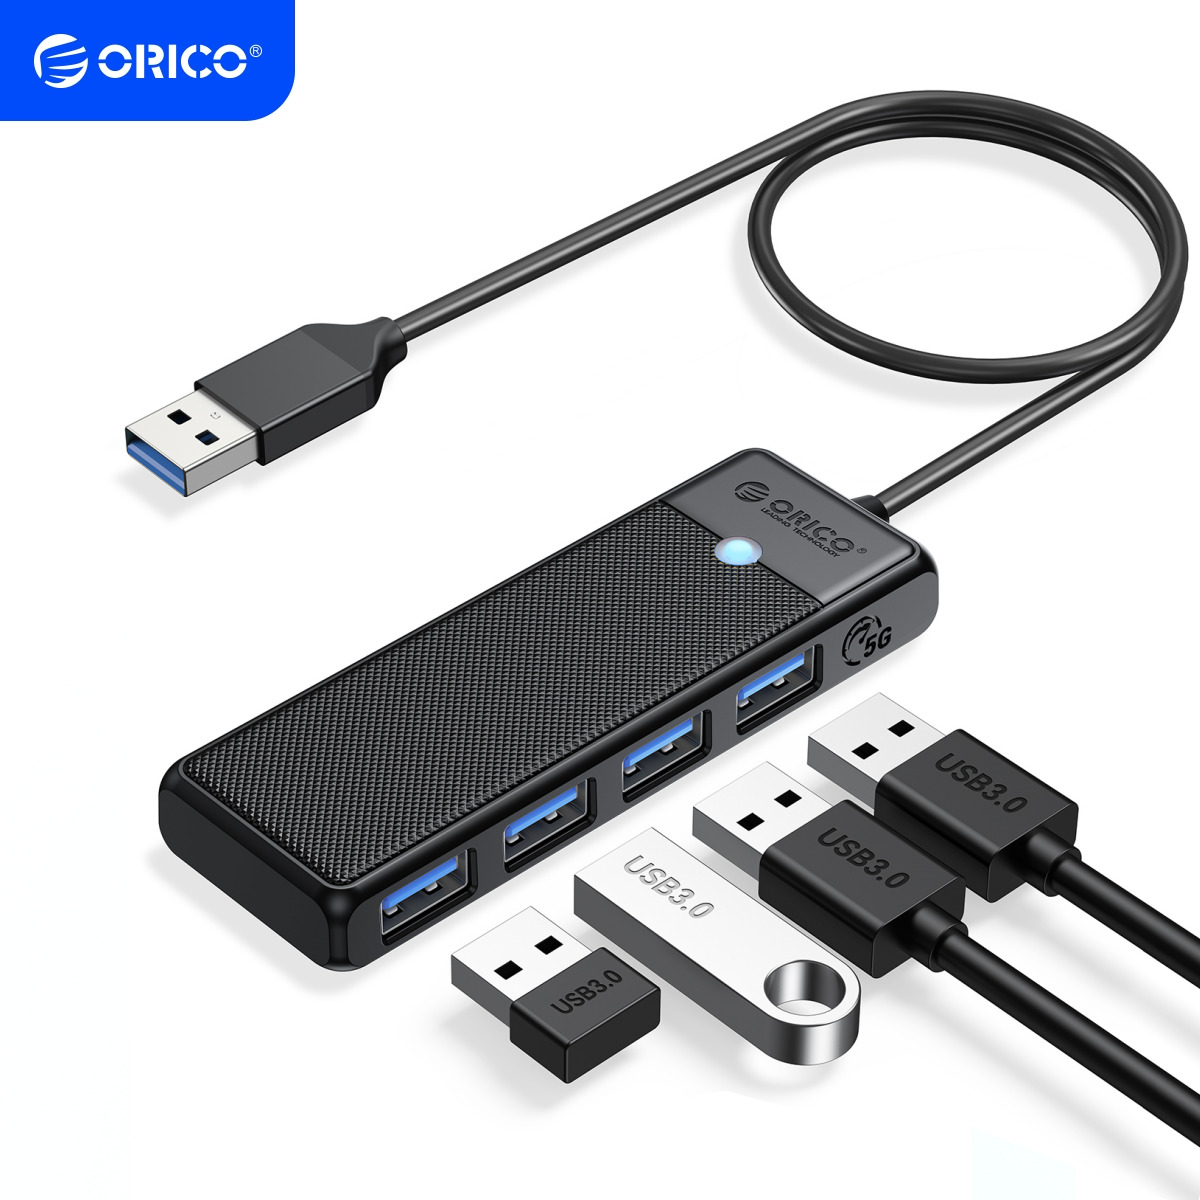 ORICO USB 3.0 Hub 4-Port Adapter Charger Data SLIM Super Speed PC Mac Laptop US